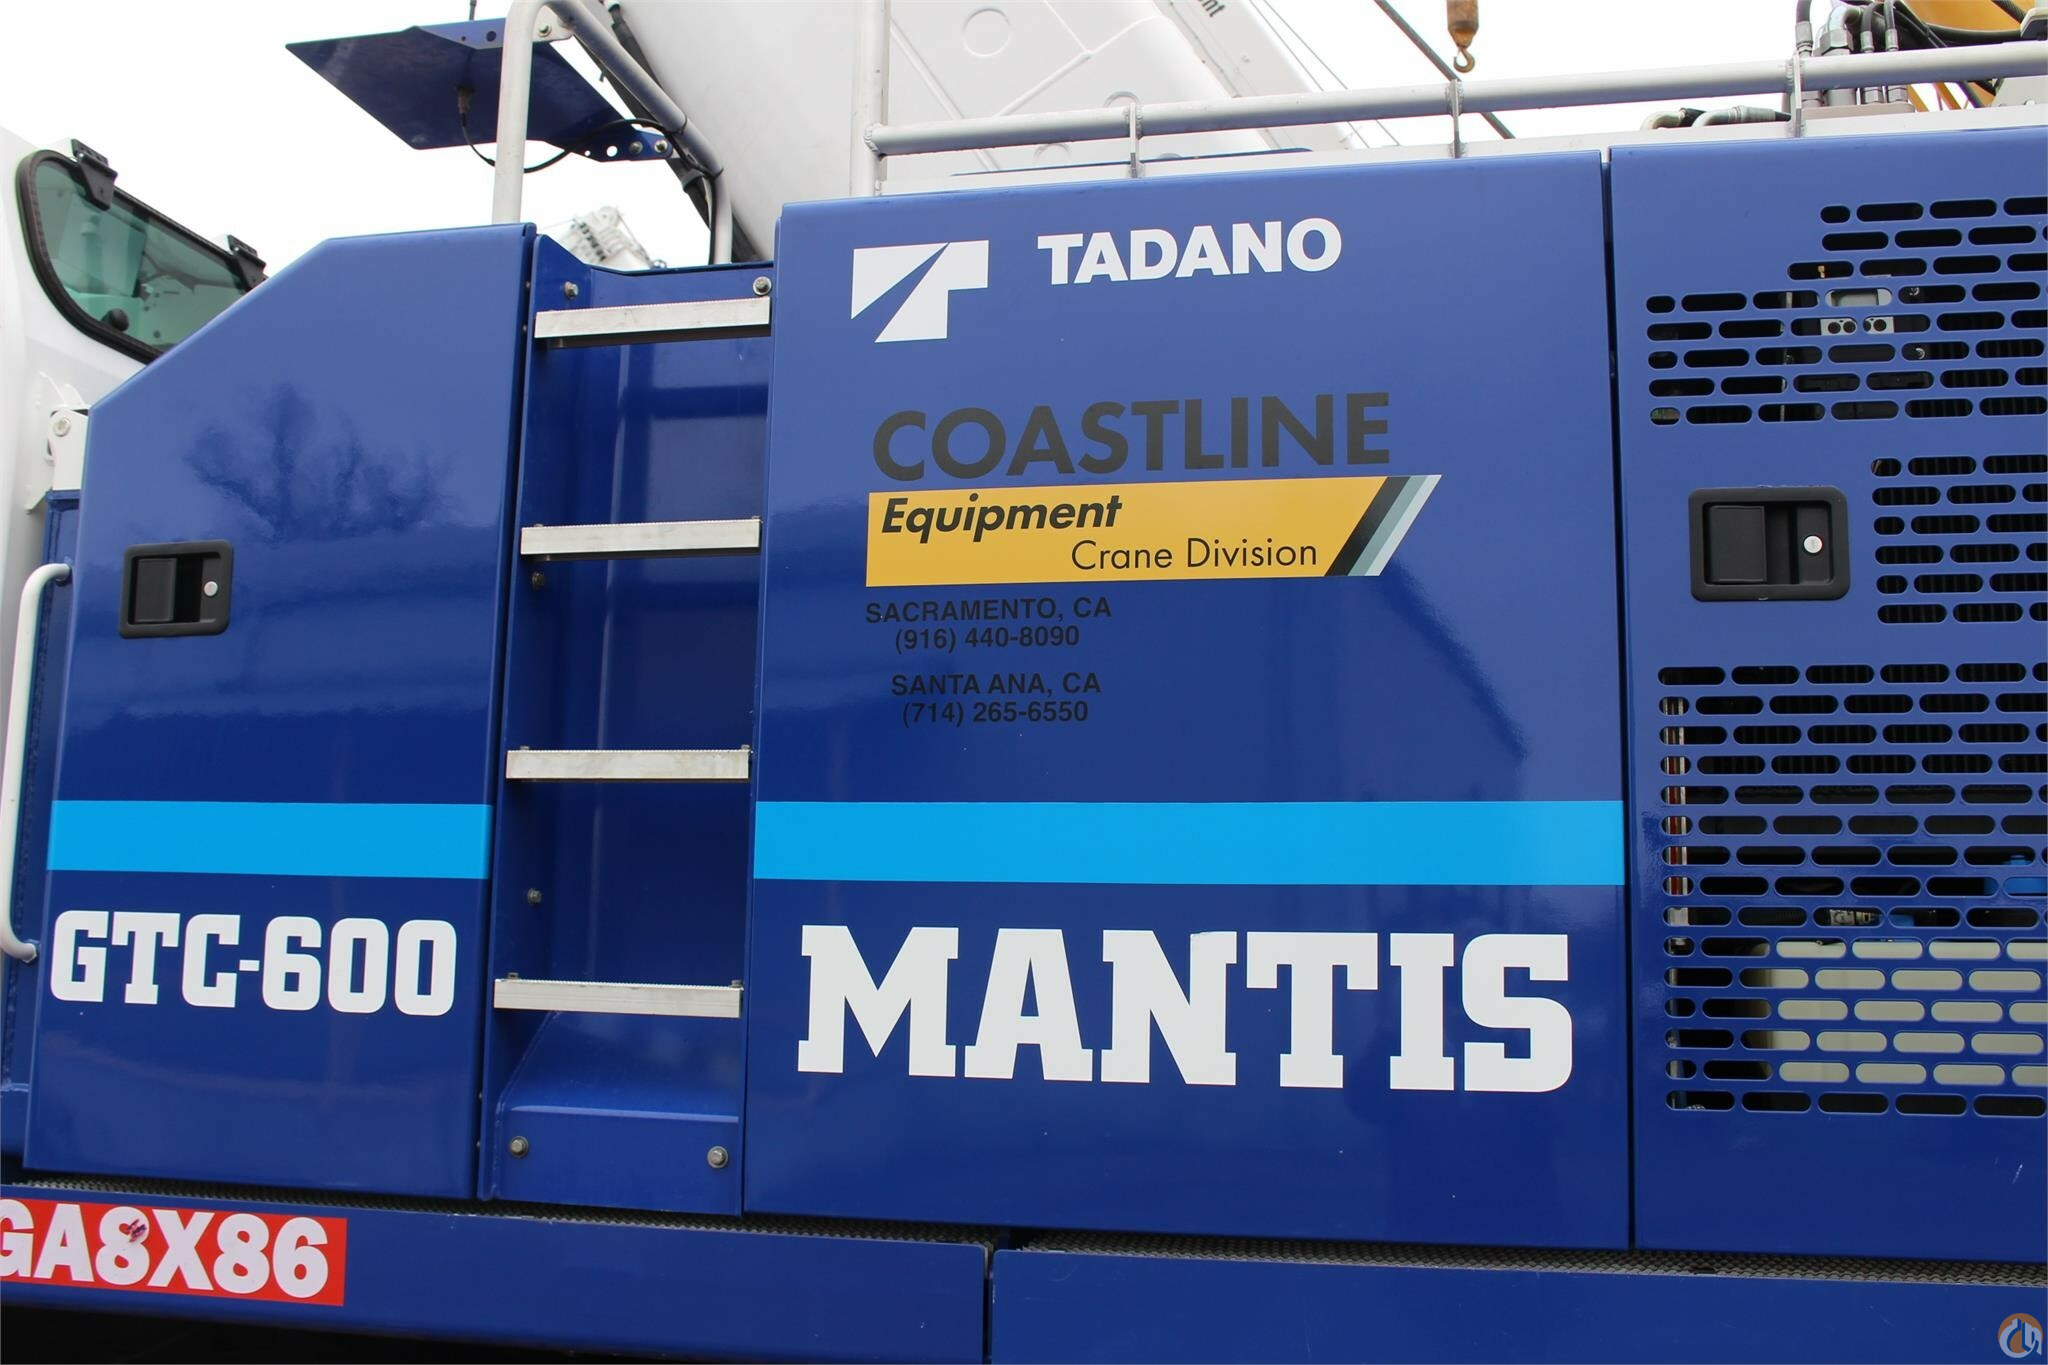 Tadano Mantis GTC-600